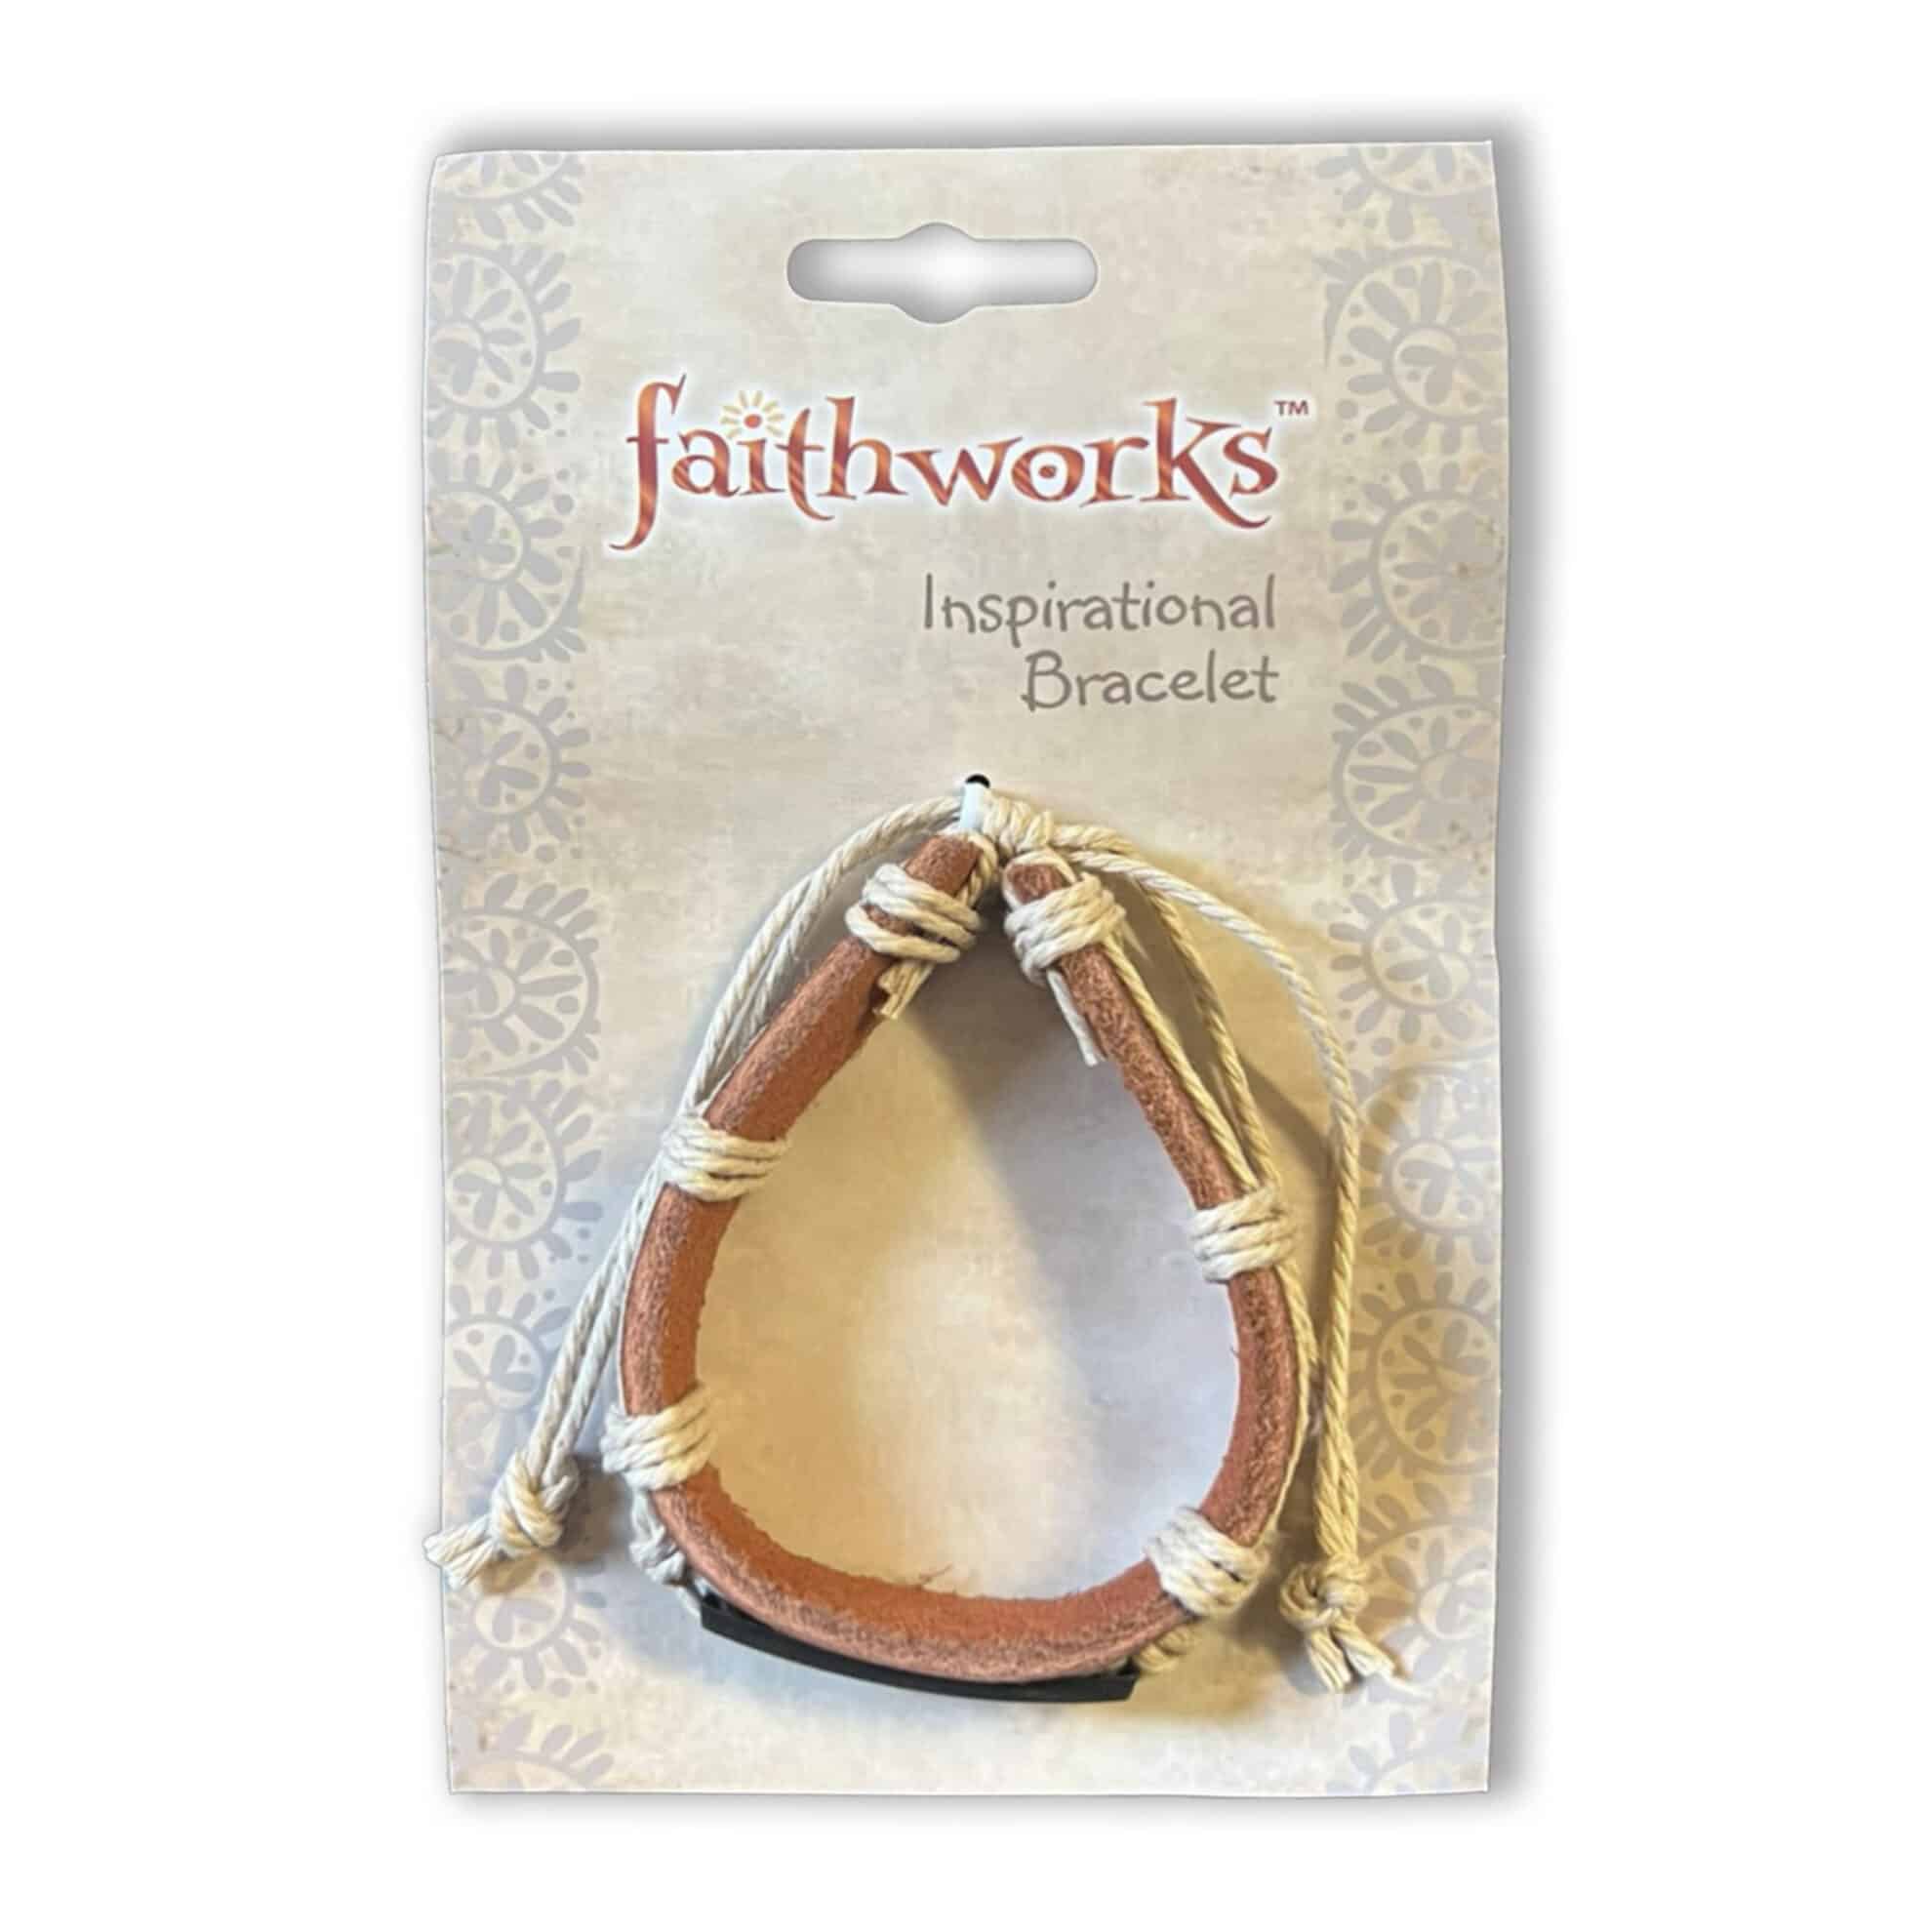 Boho WWJD Bracelets for Teen Girls What Would Jesus Do Beaded Elastic  Bracelets Inspirational Religious Christian Jewelry Gift - AliExpress